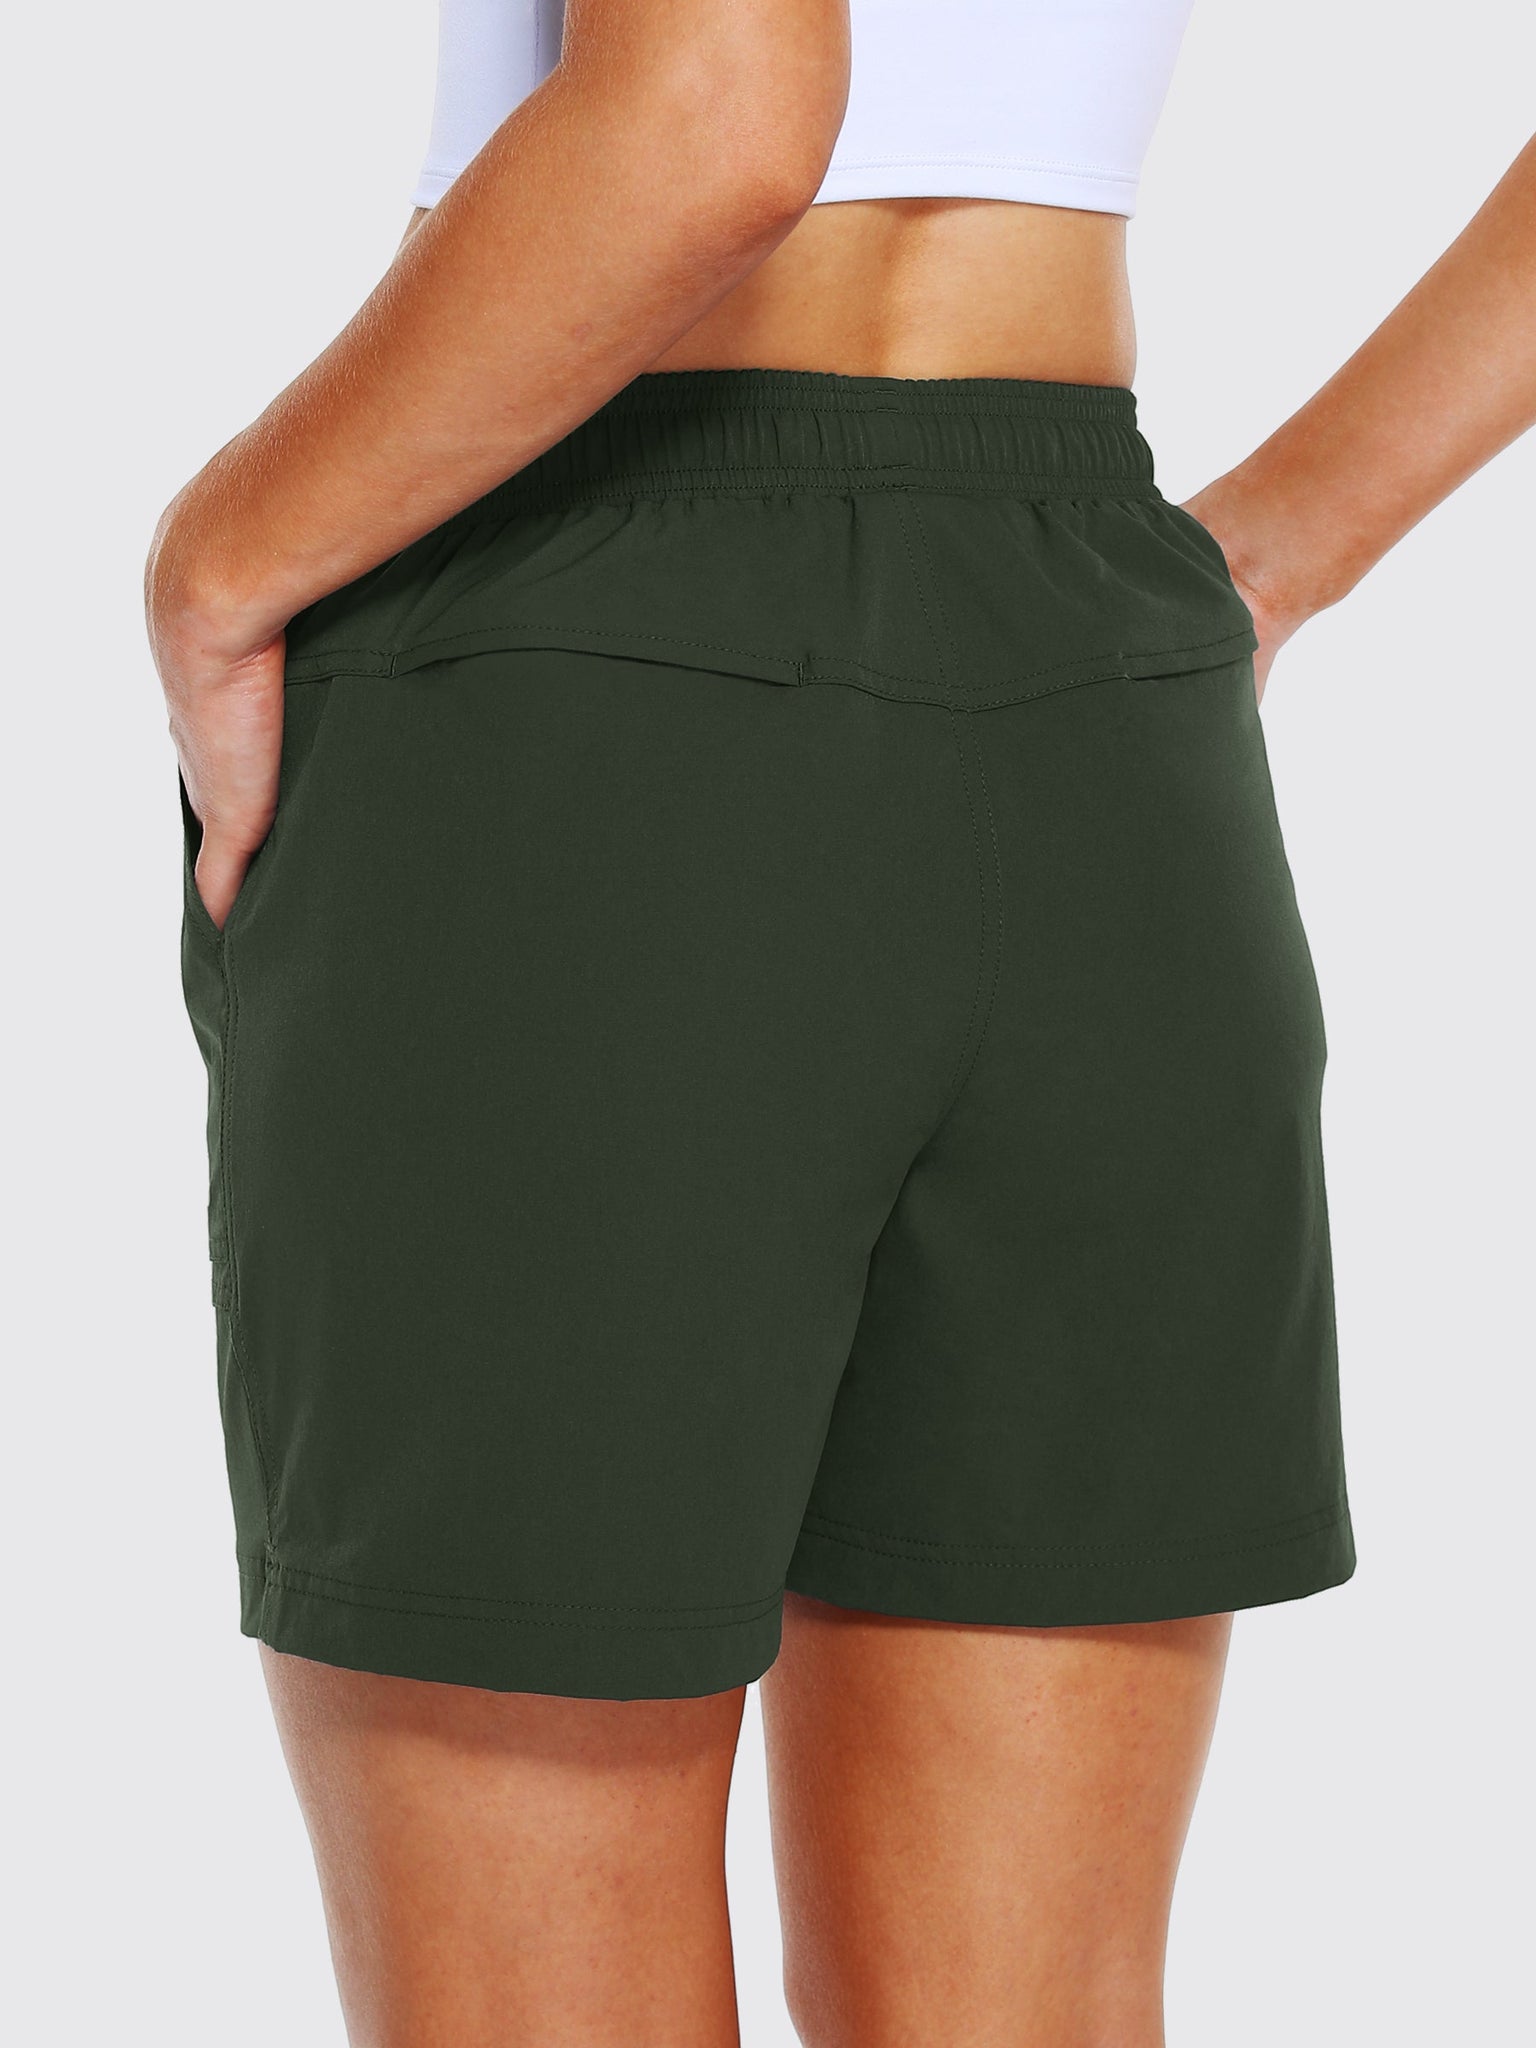 Willit Women's Hiking Golf Shorts_ArmyGreen3